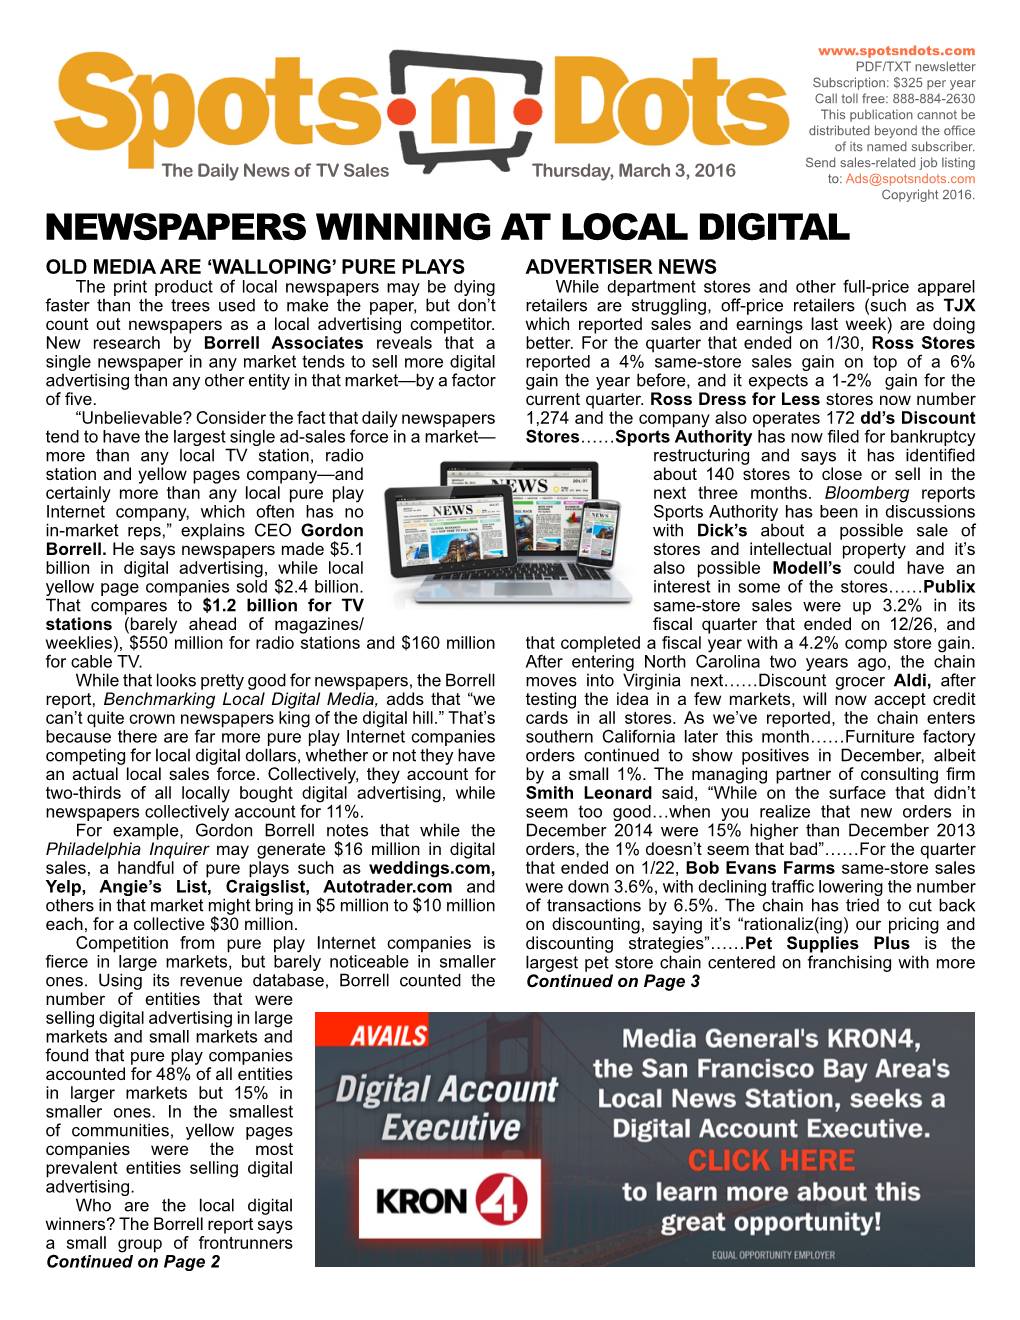 Newspapers Winning at Local Digital